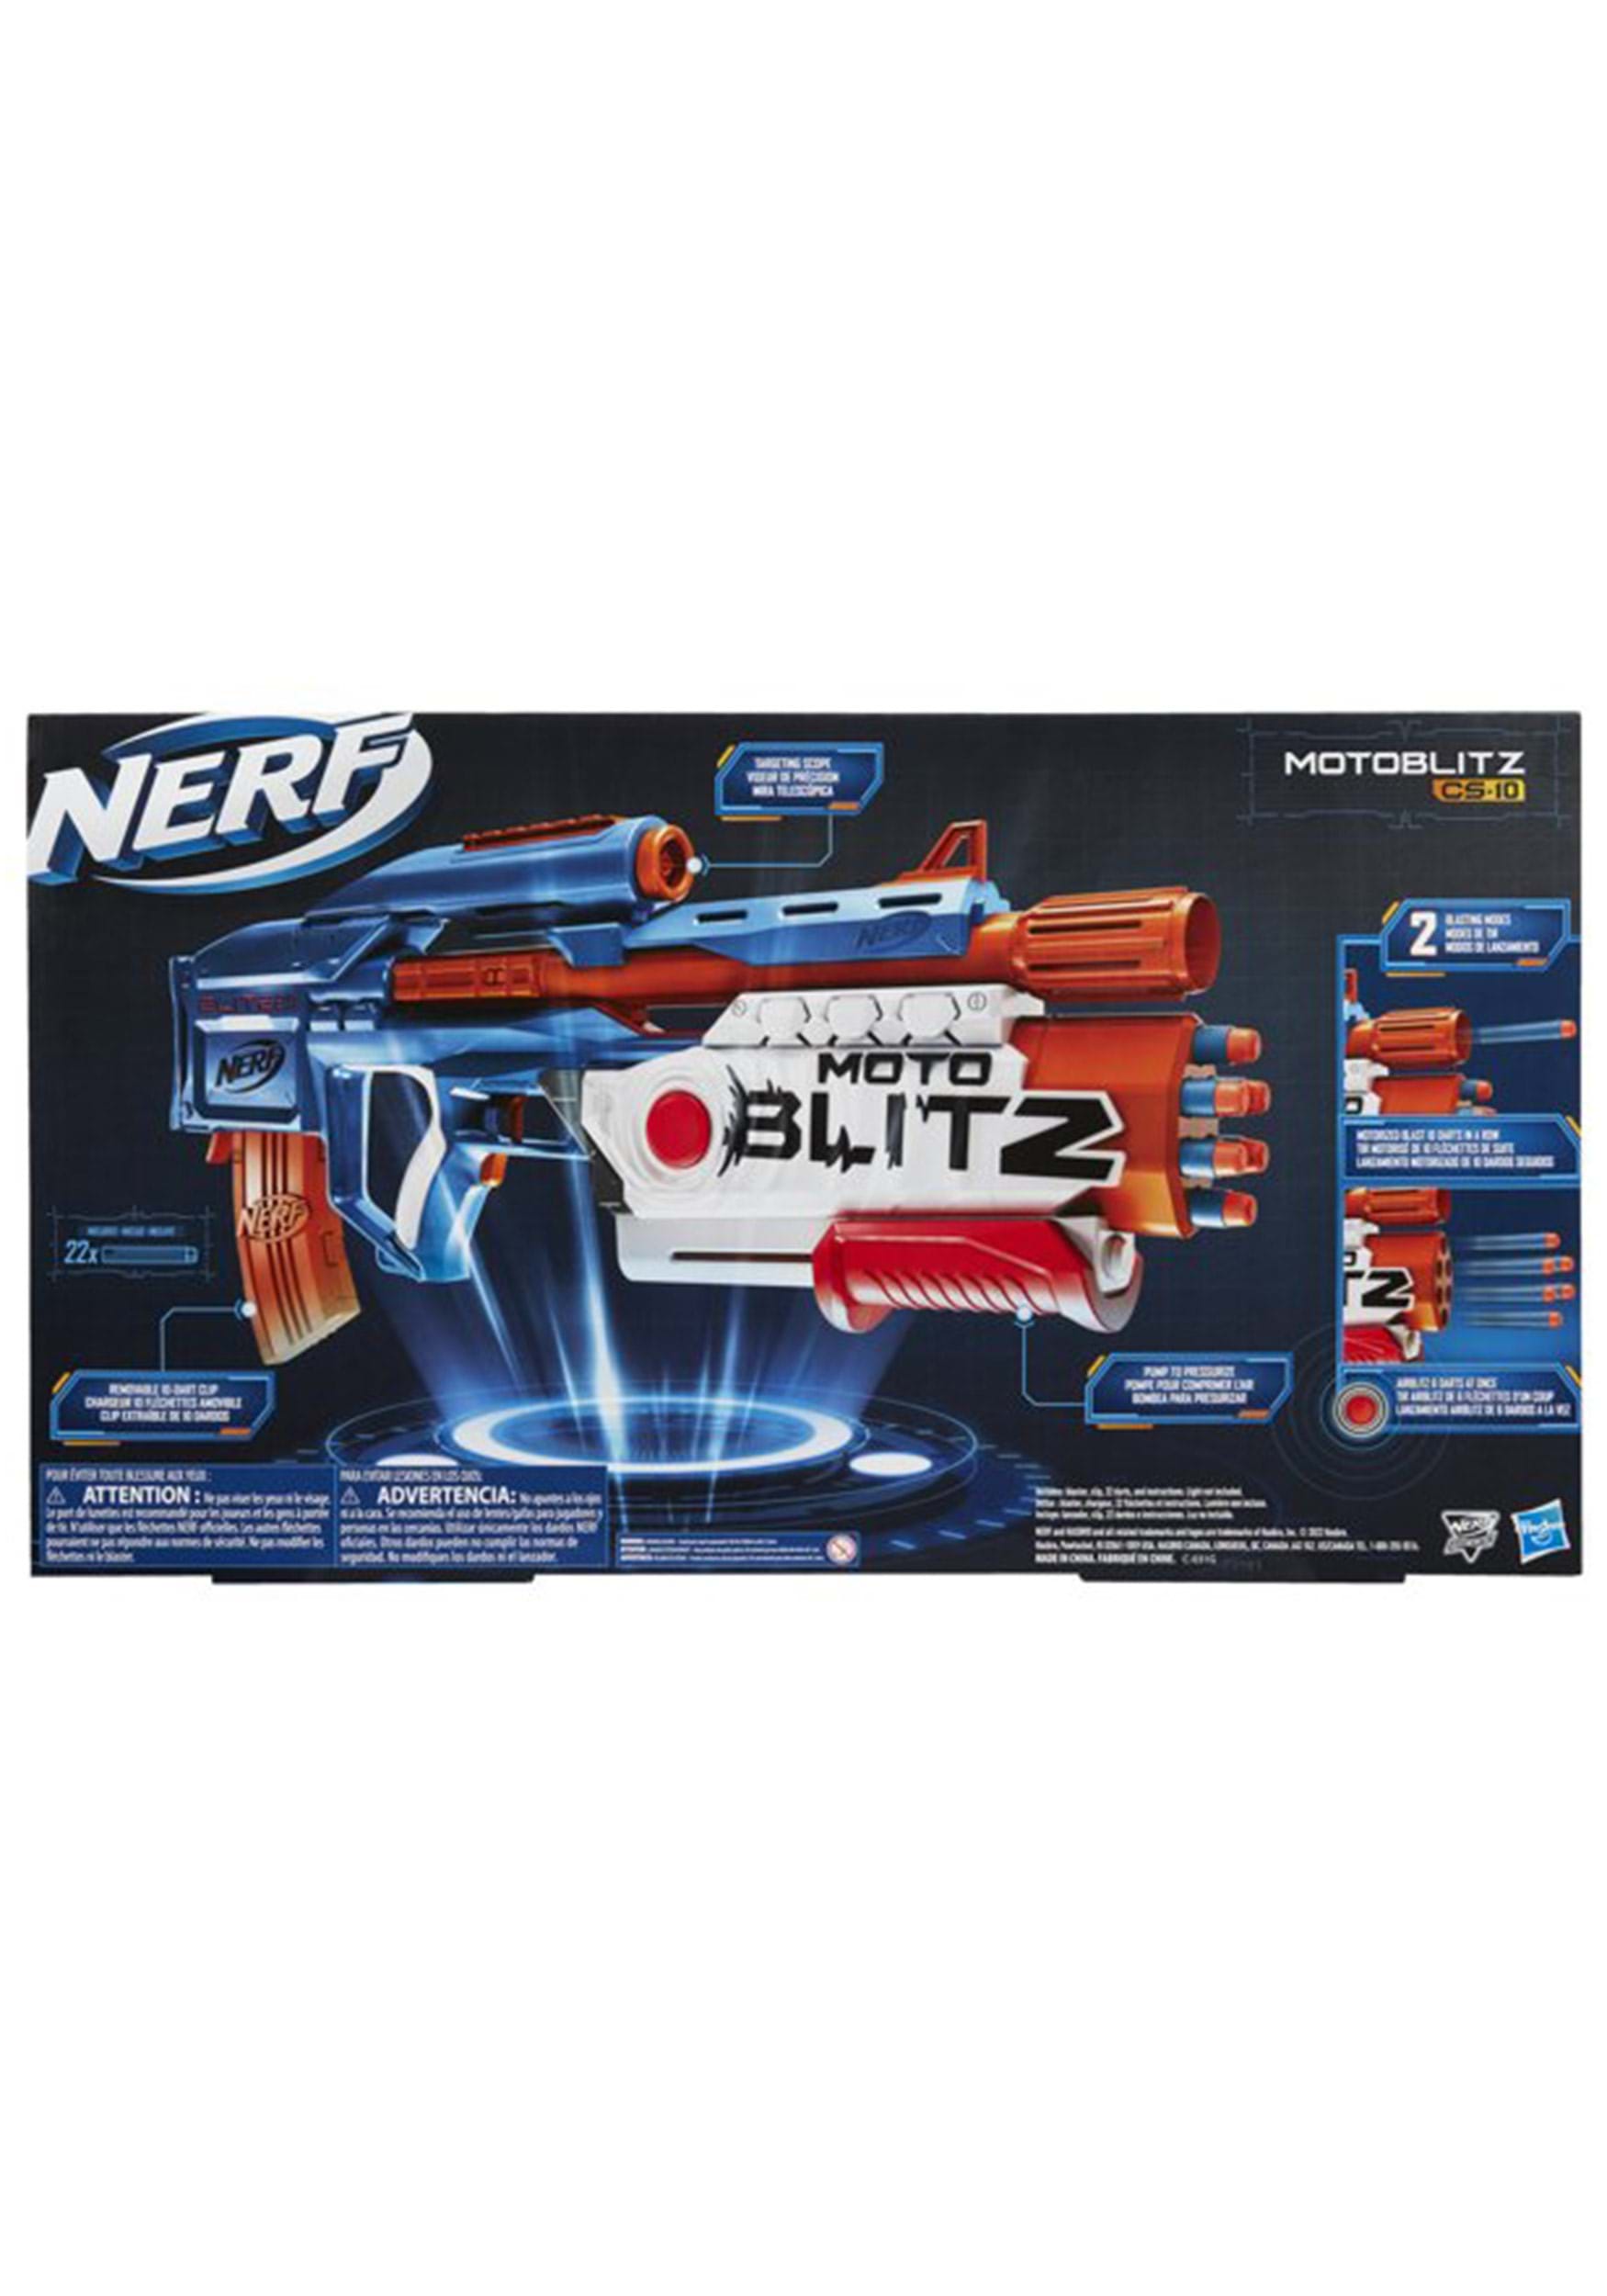 NERF Elite 2.0 Motoblitz CS 10 Blaster 1 ct